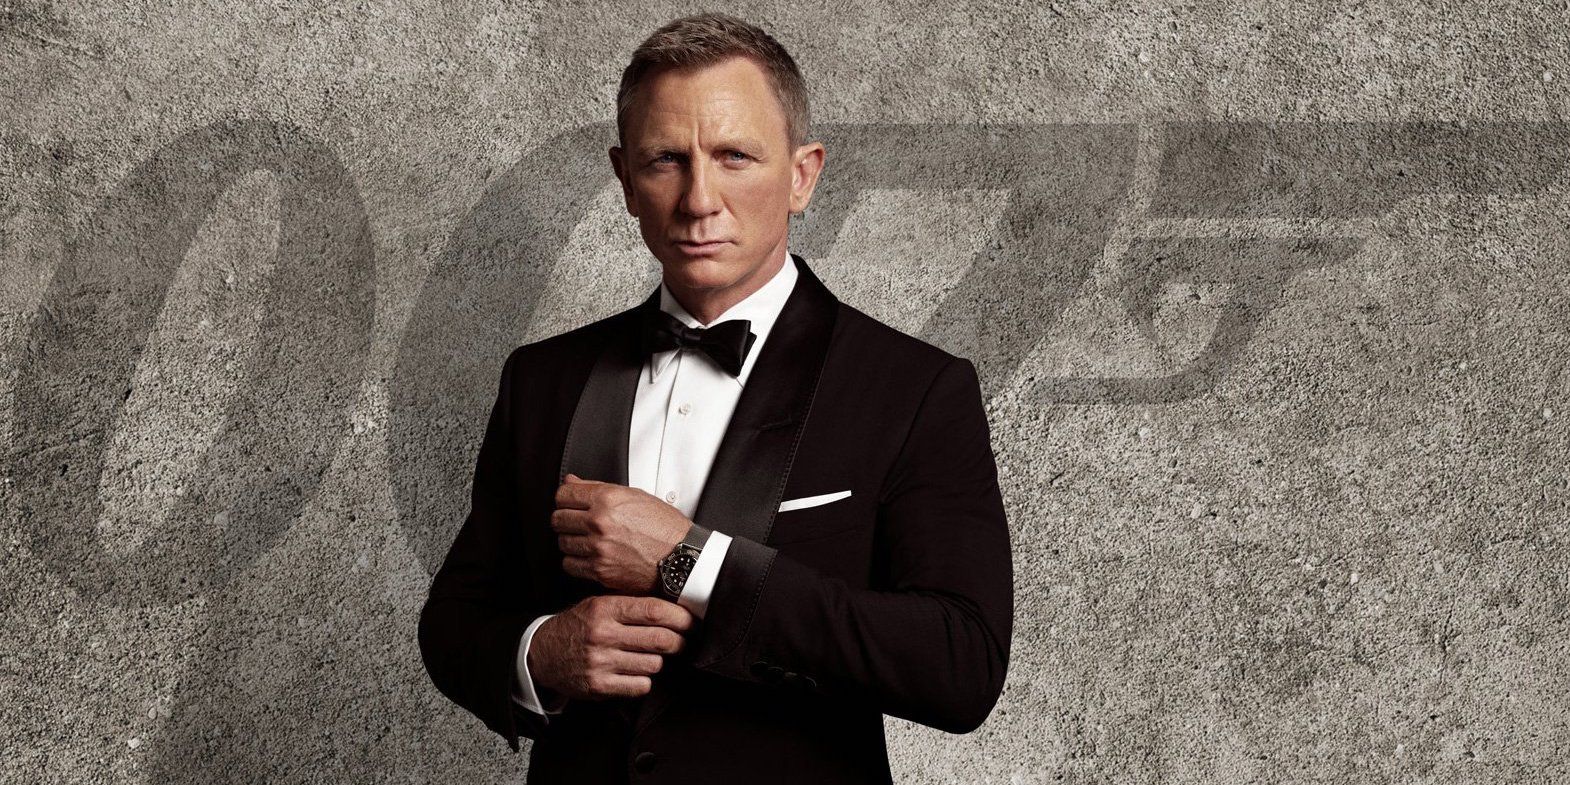 007 No Time to Die James Bond in Tuxedo